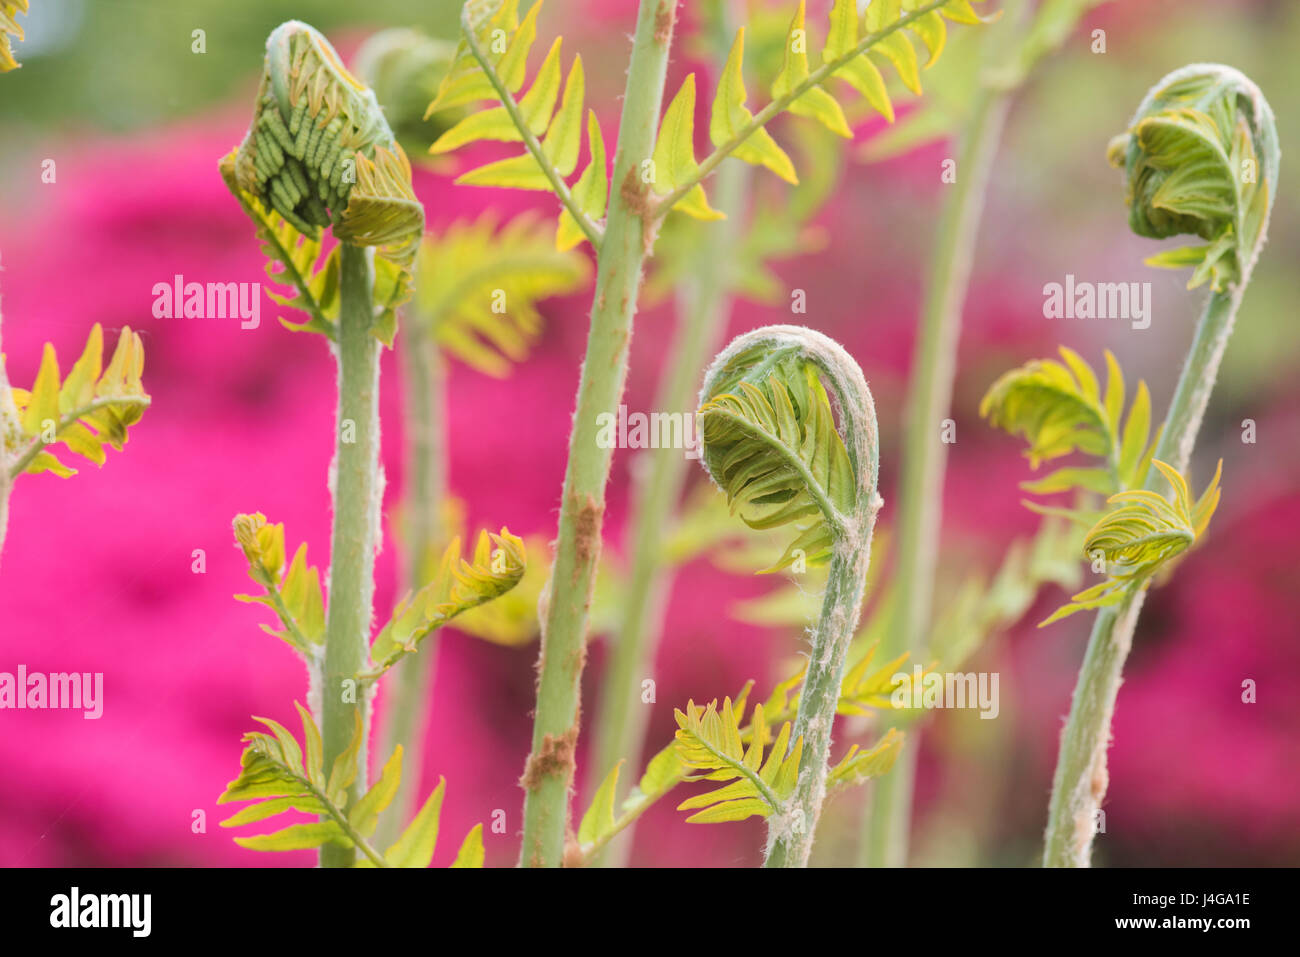 Osmunda regalis. New Royal fern fronds unfolding in april. UK Stock Photo